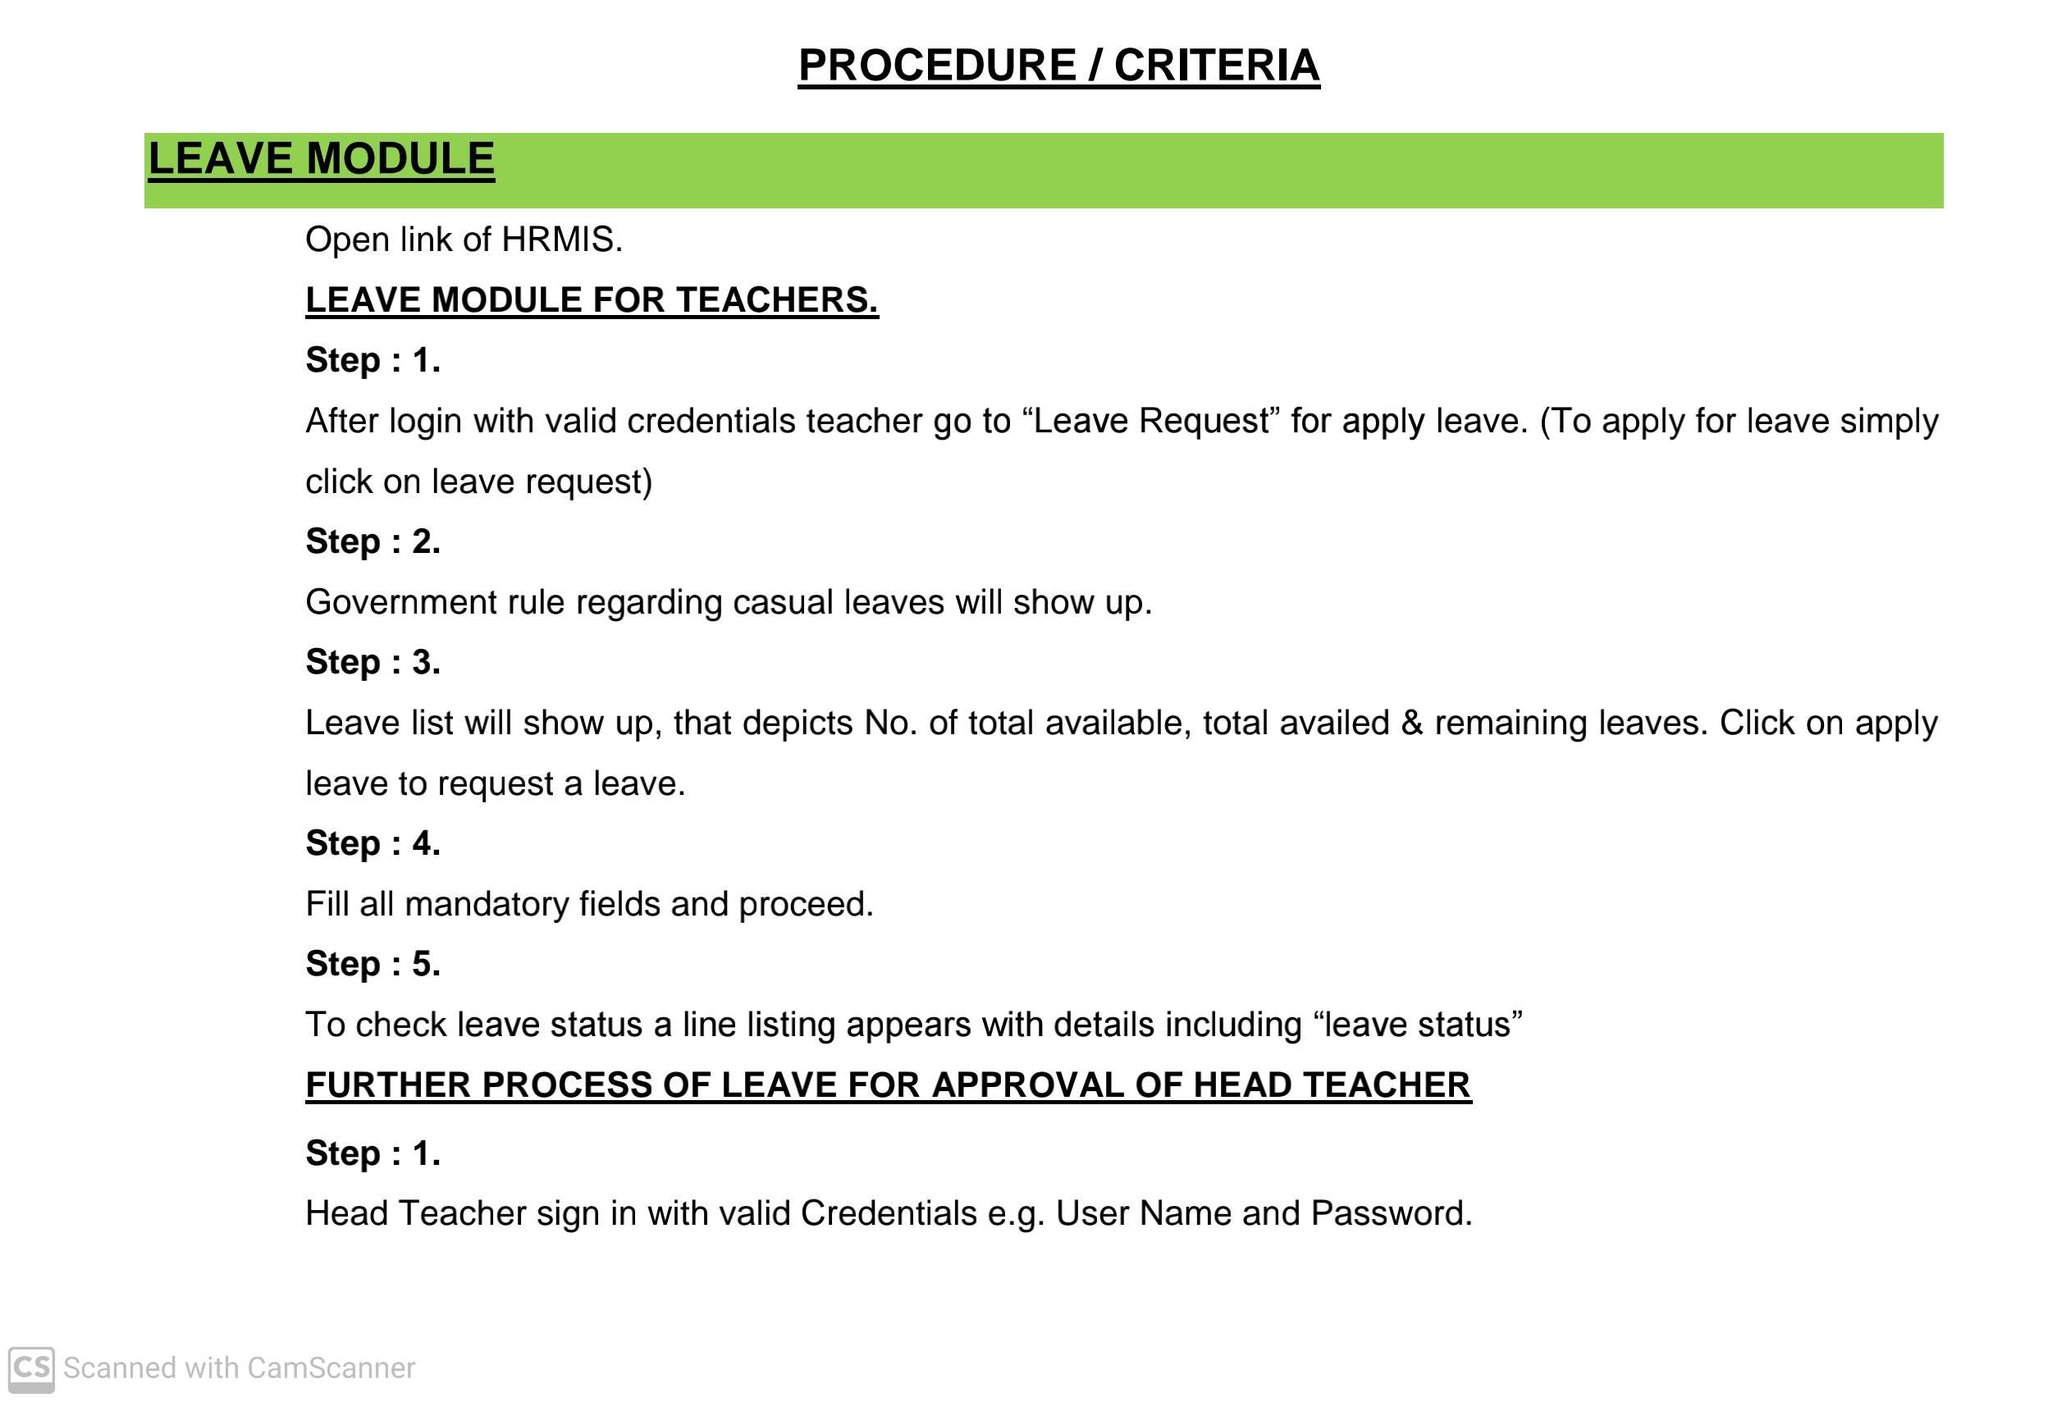 Procedure Criteria for Leave Module for Teachers